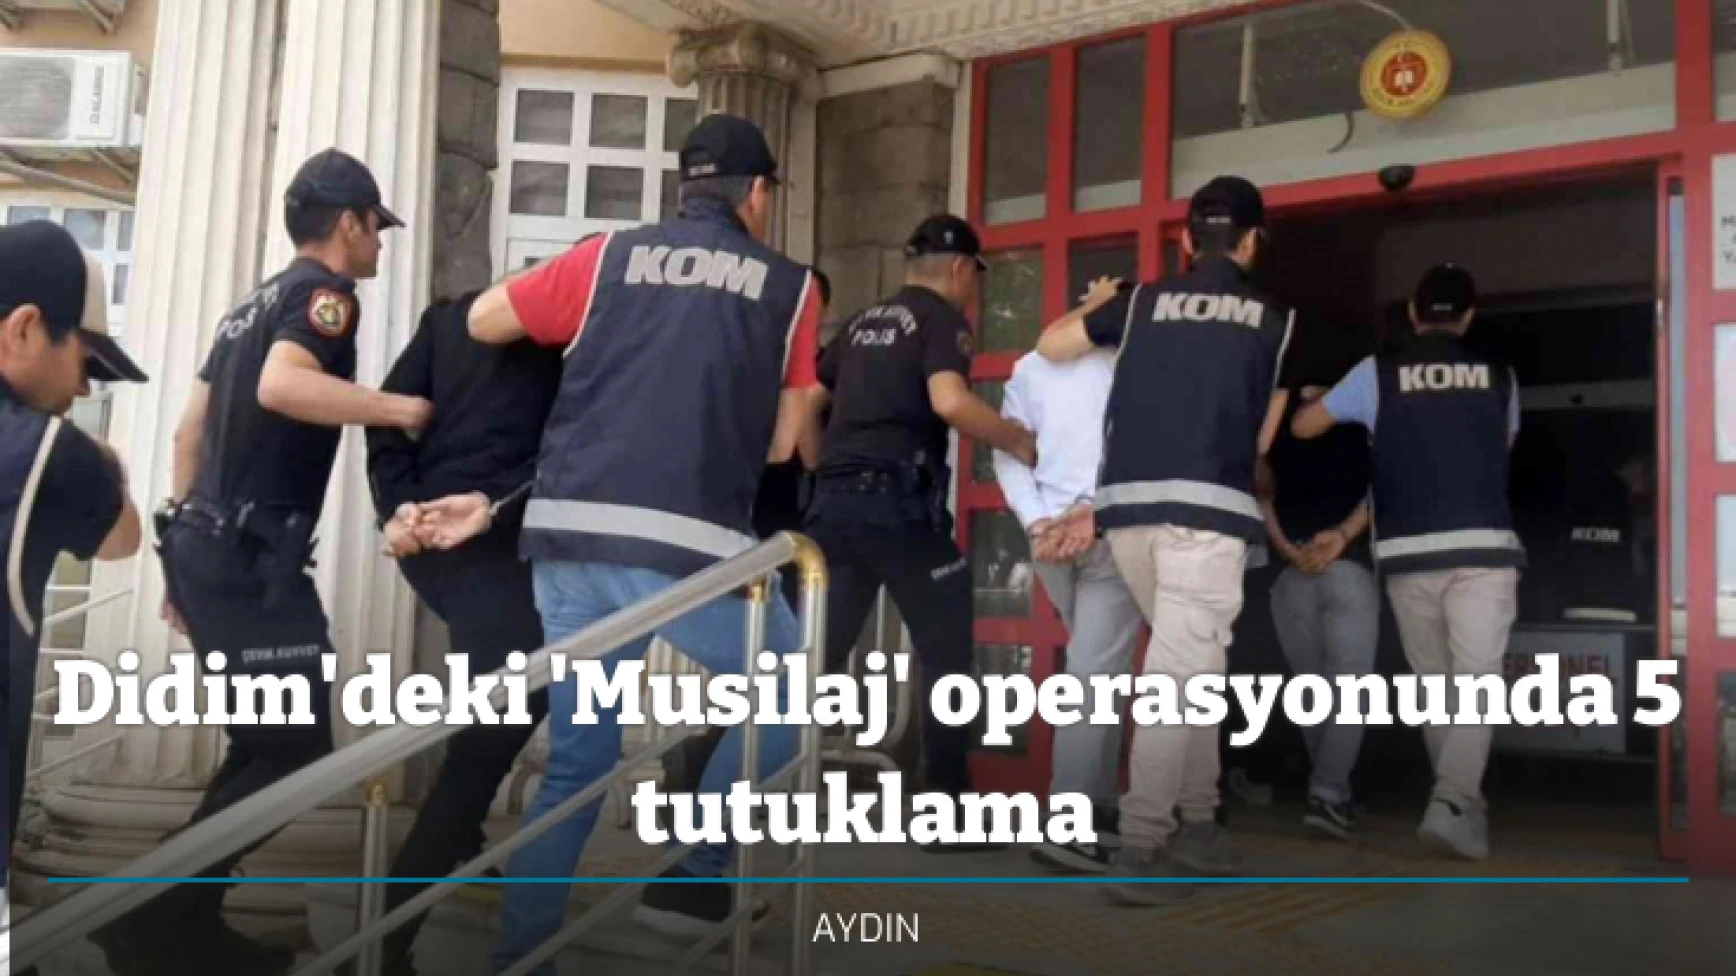 Didim'deki 'Musilaj' operasyonunda 5 tutuklama